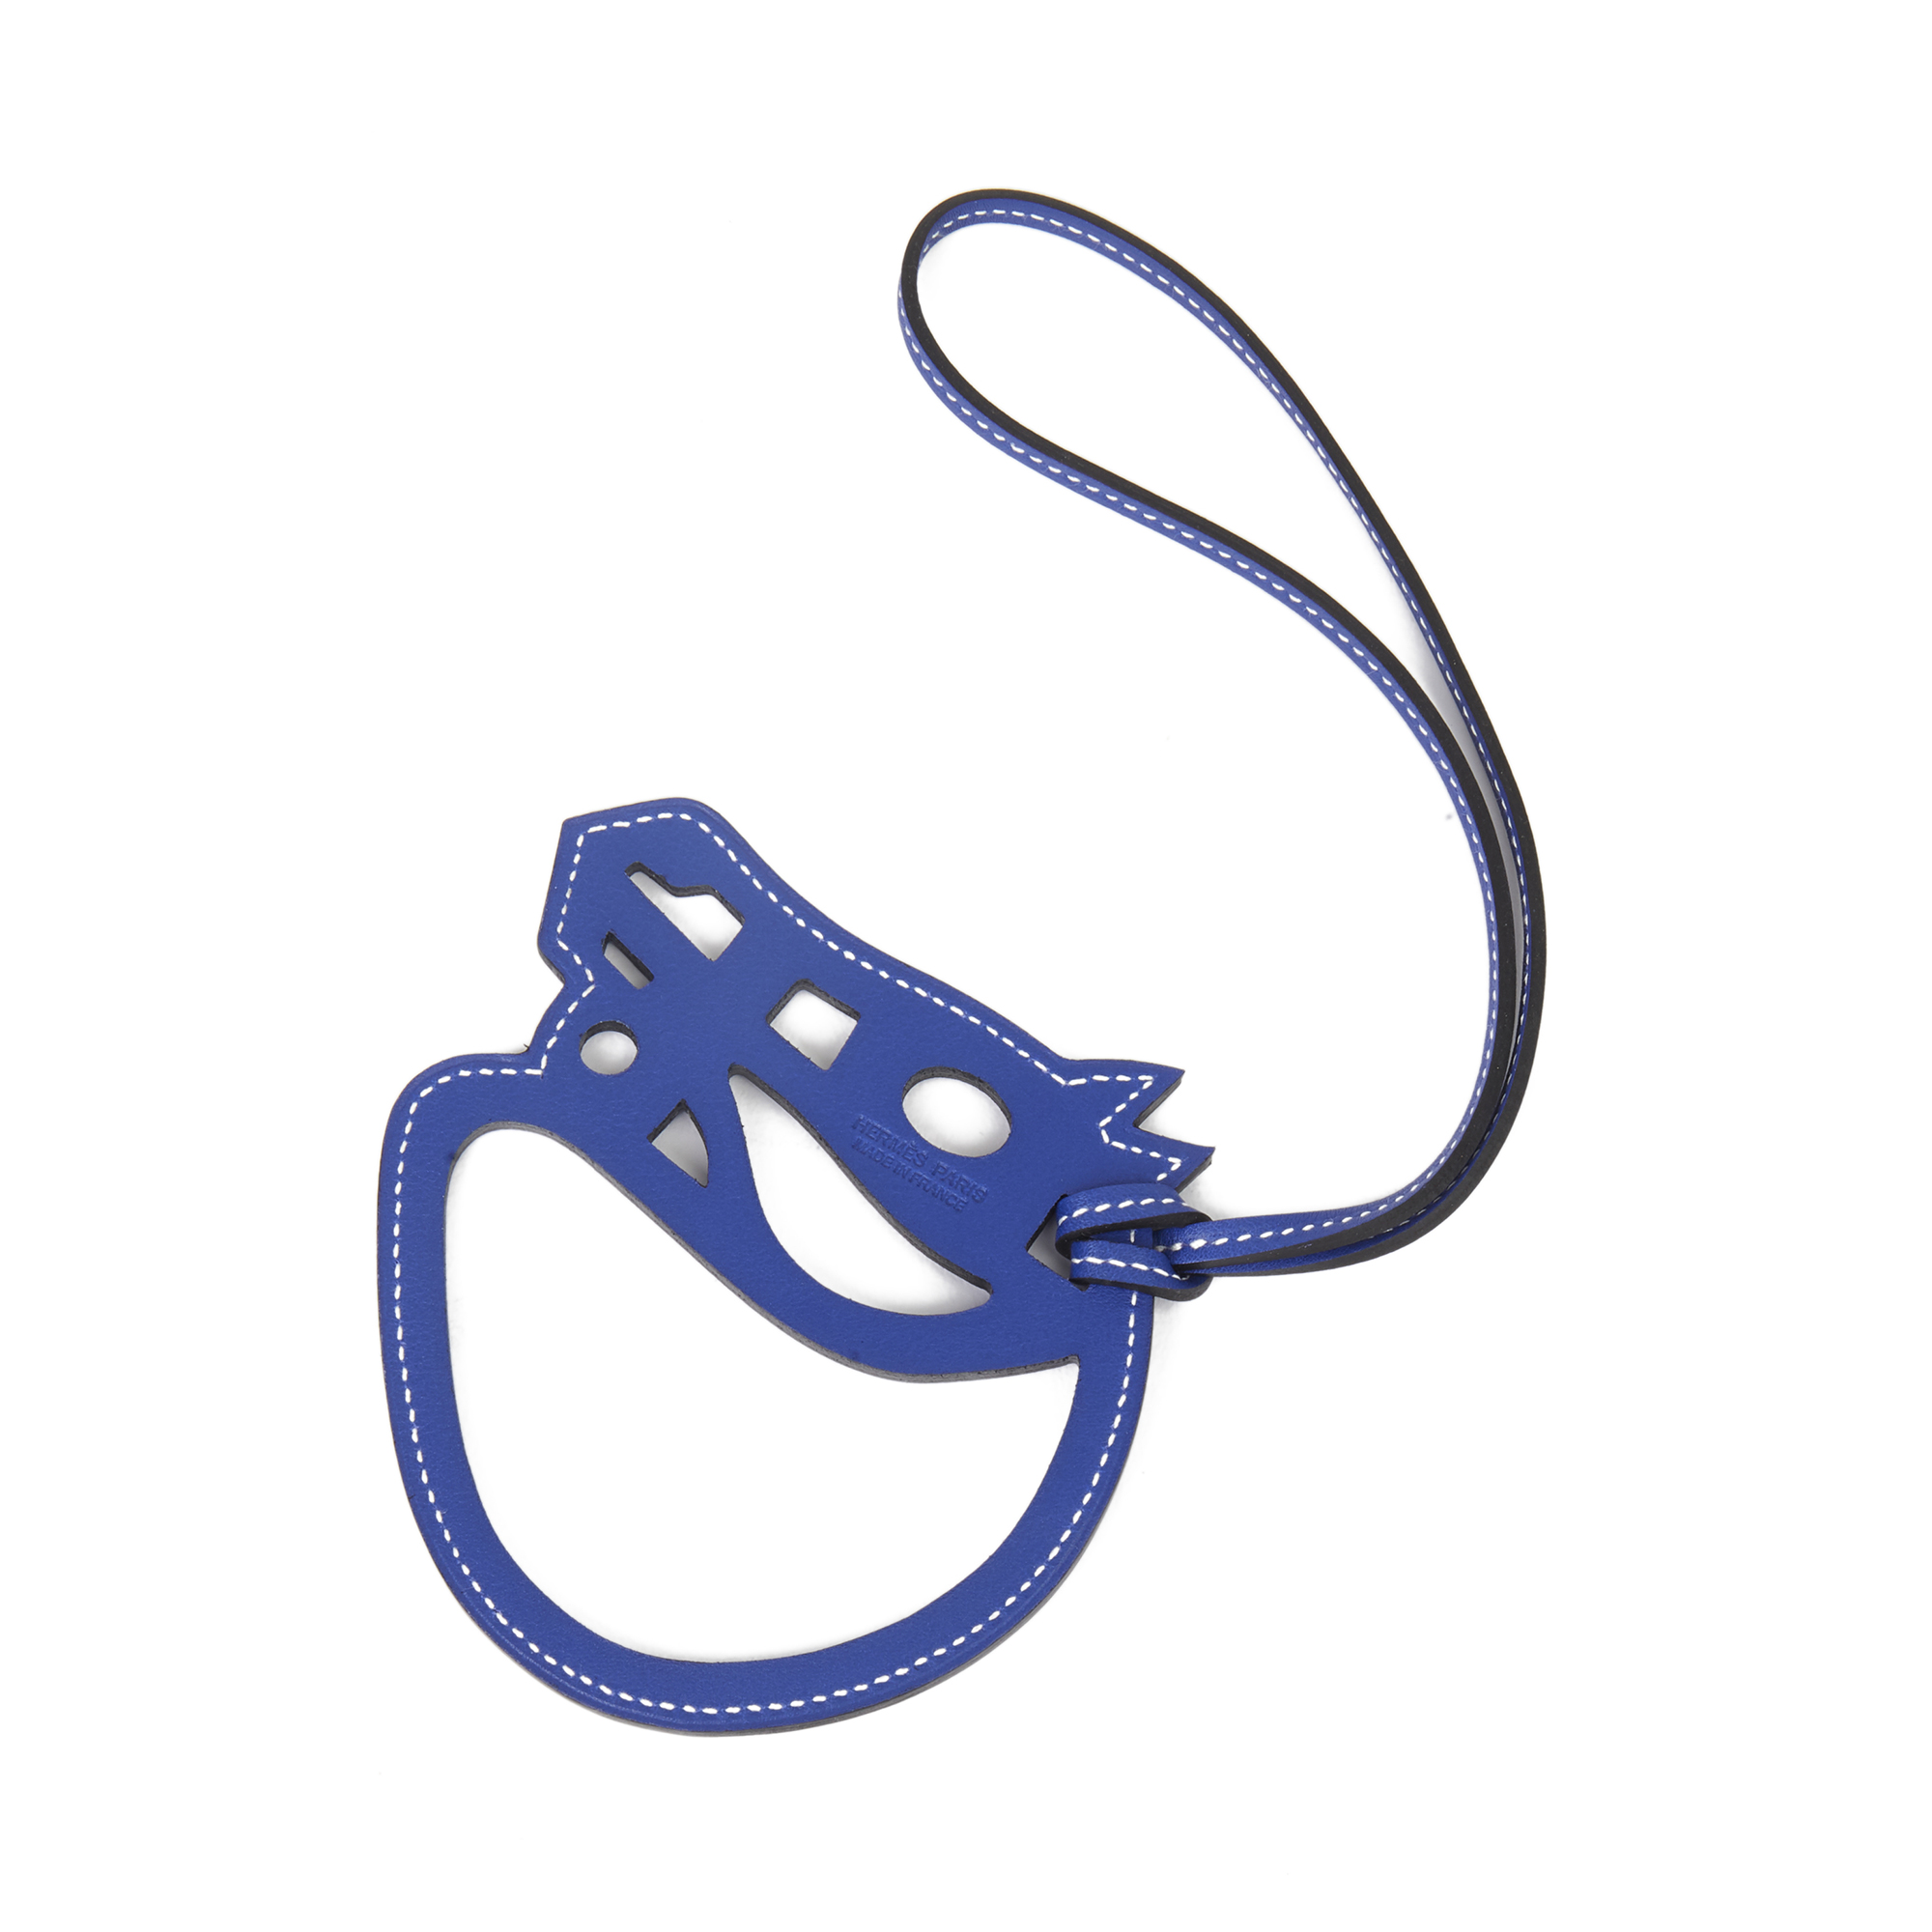 Hermès Bleu Electric Swift Leather Paddock Cheval Charm - Image 5 of 5